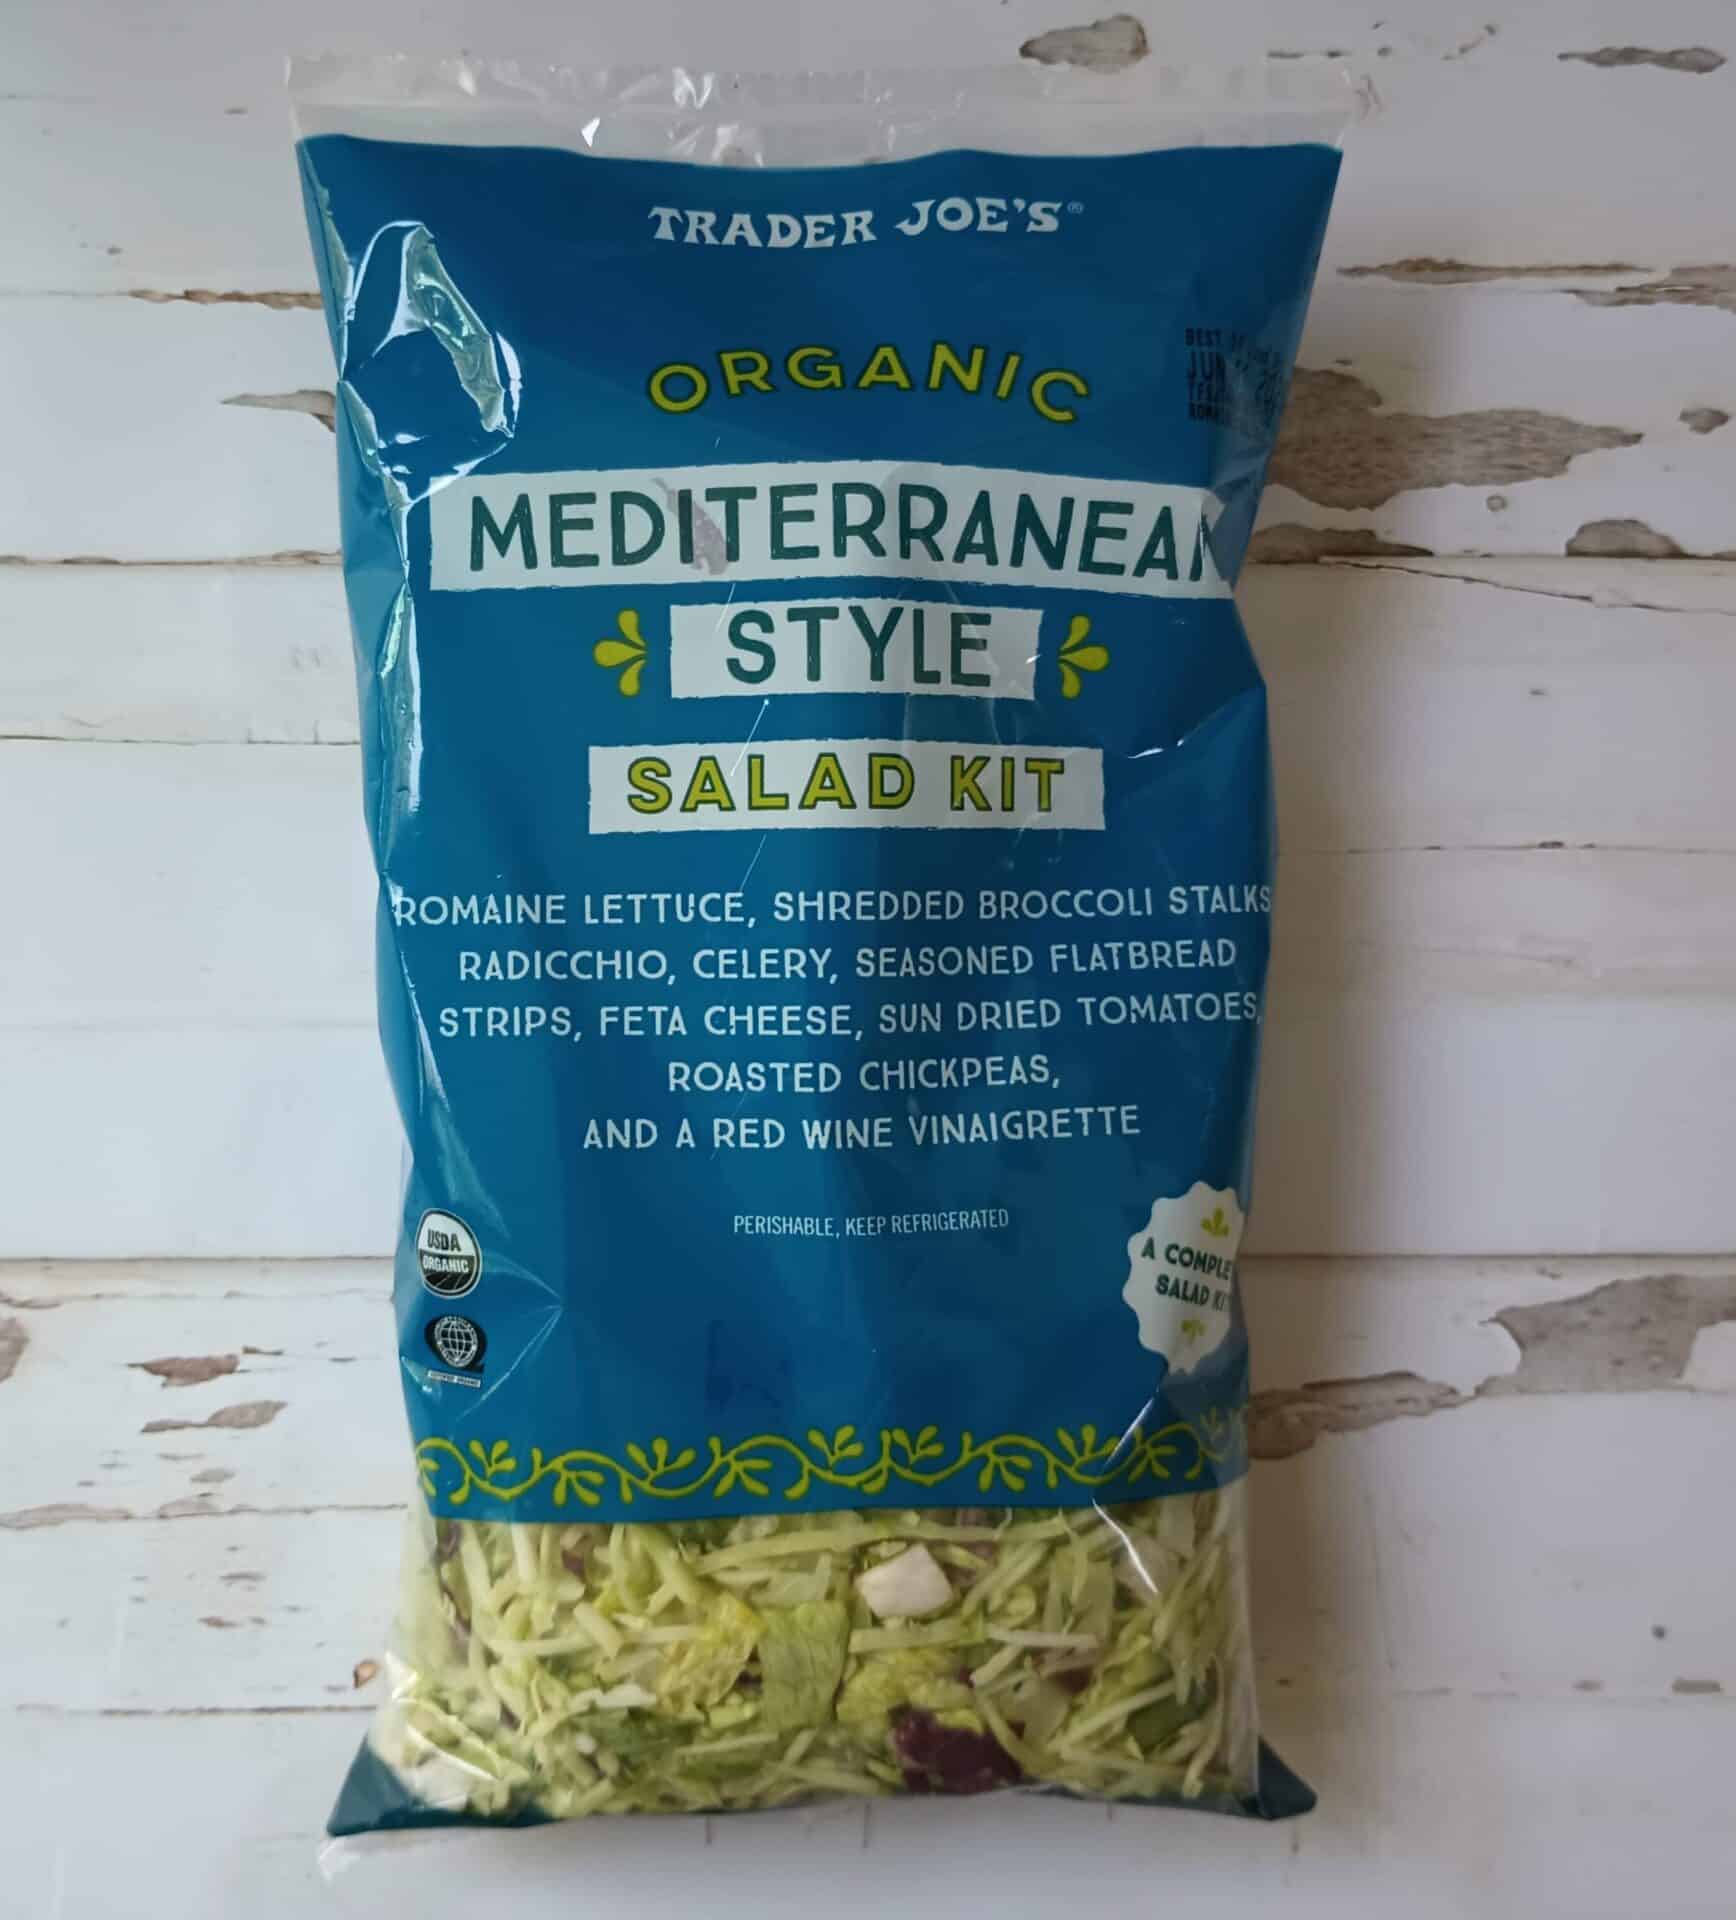 Trader Joe's Organic Mediterranean Style Salad Kid